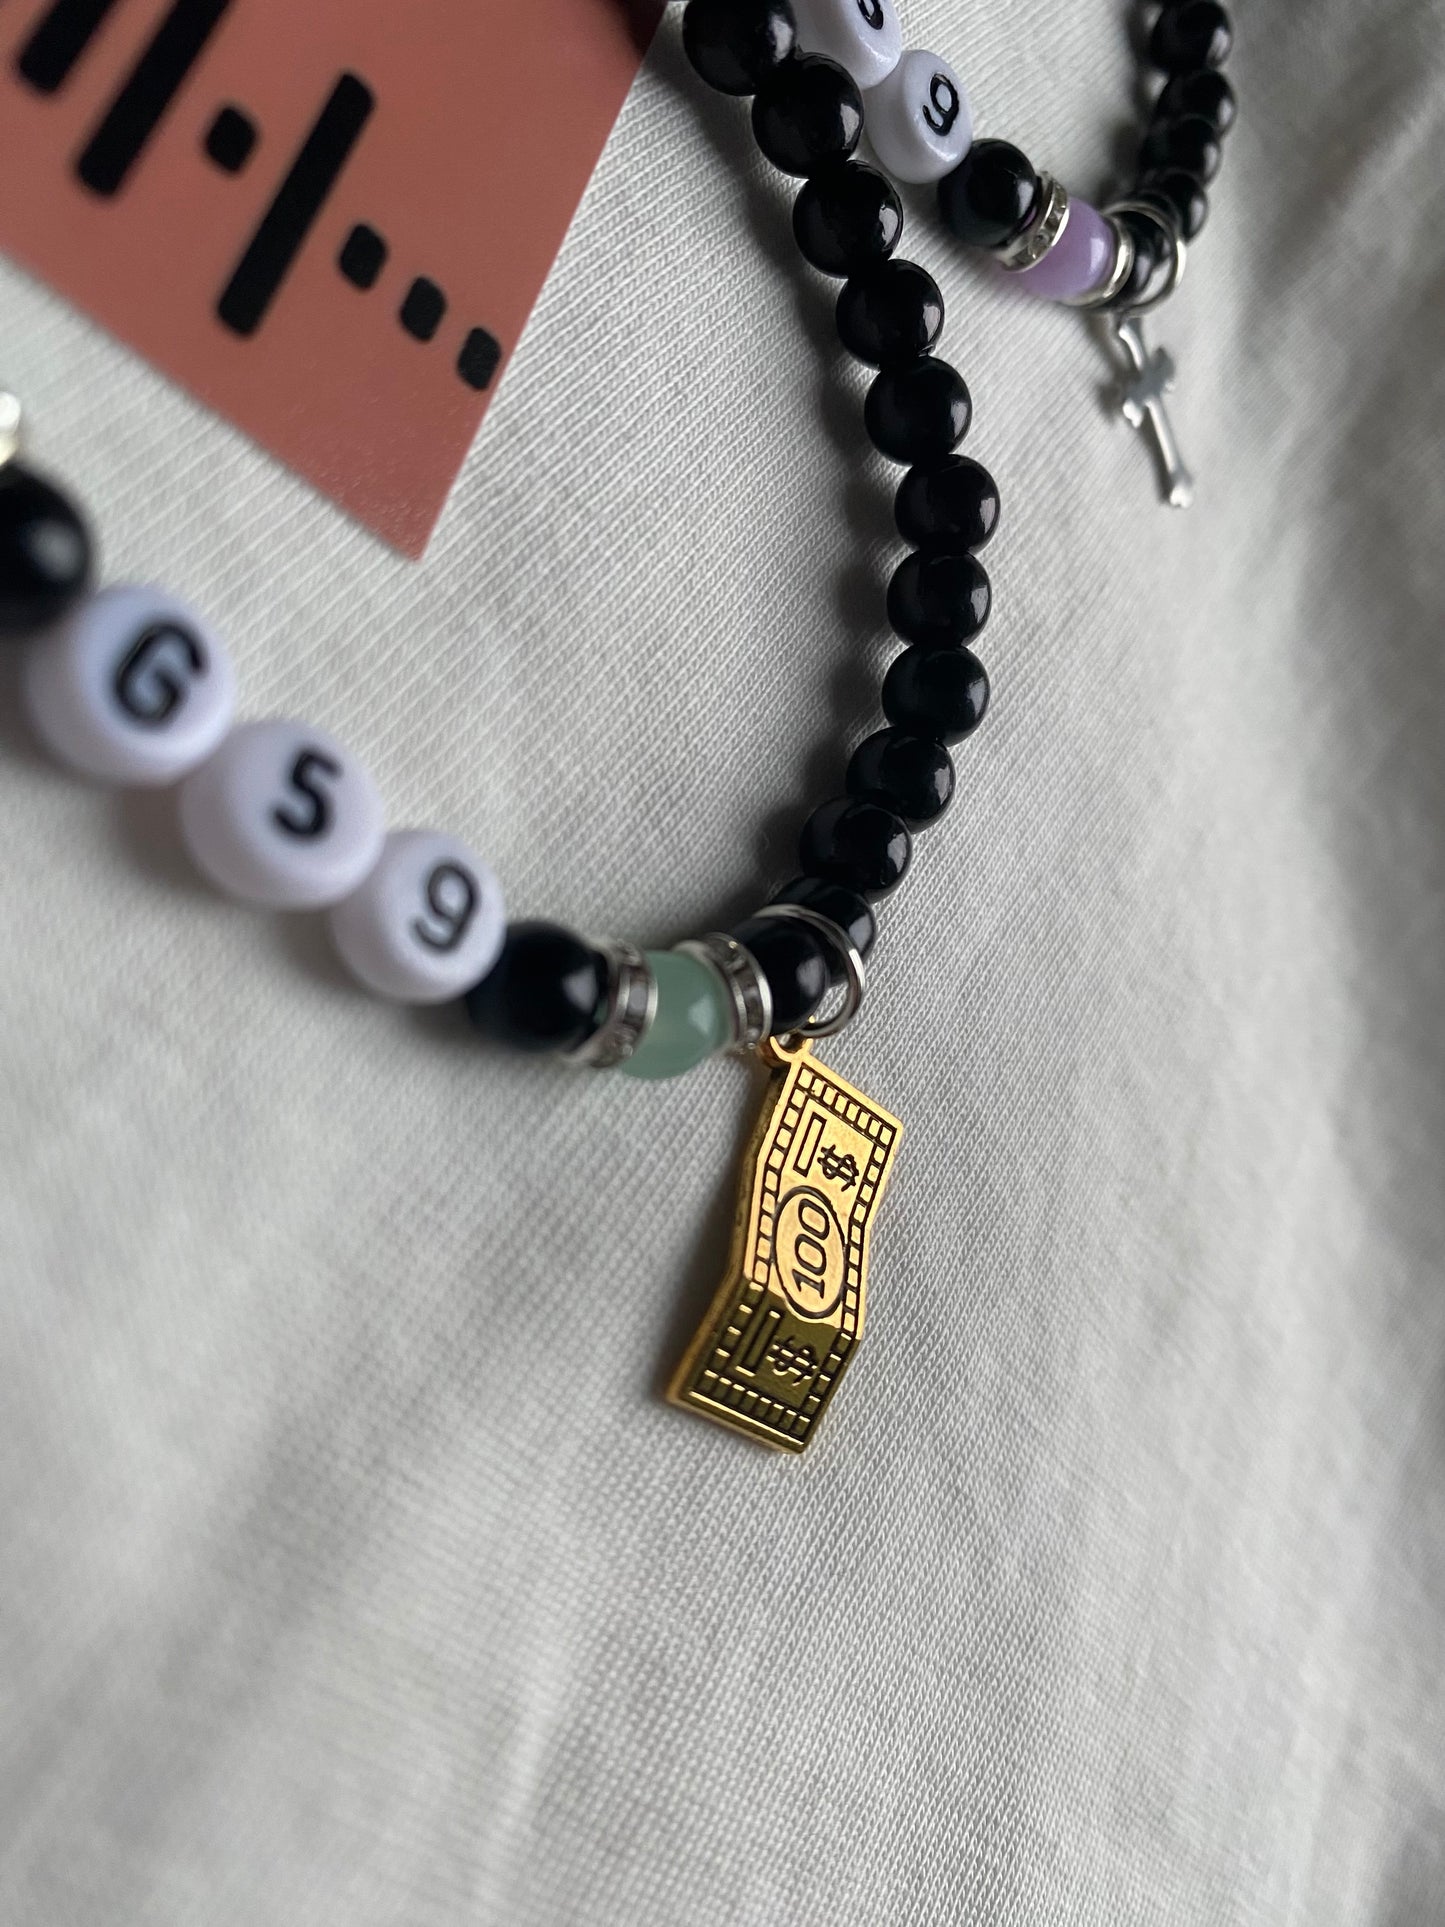 G59 matching bracelets